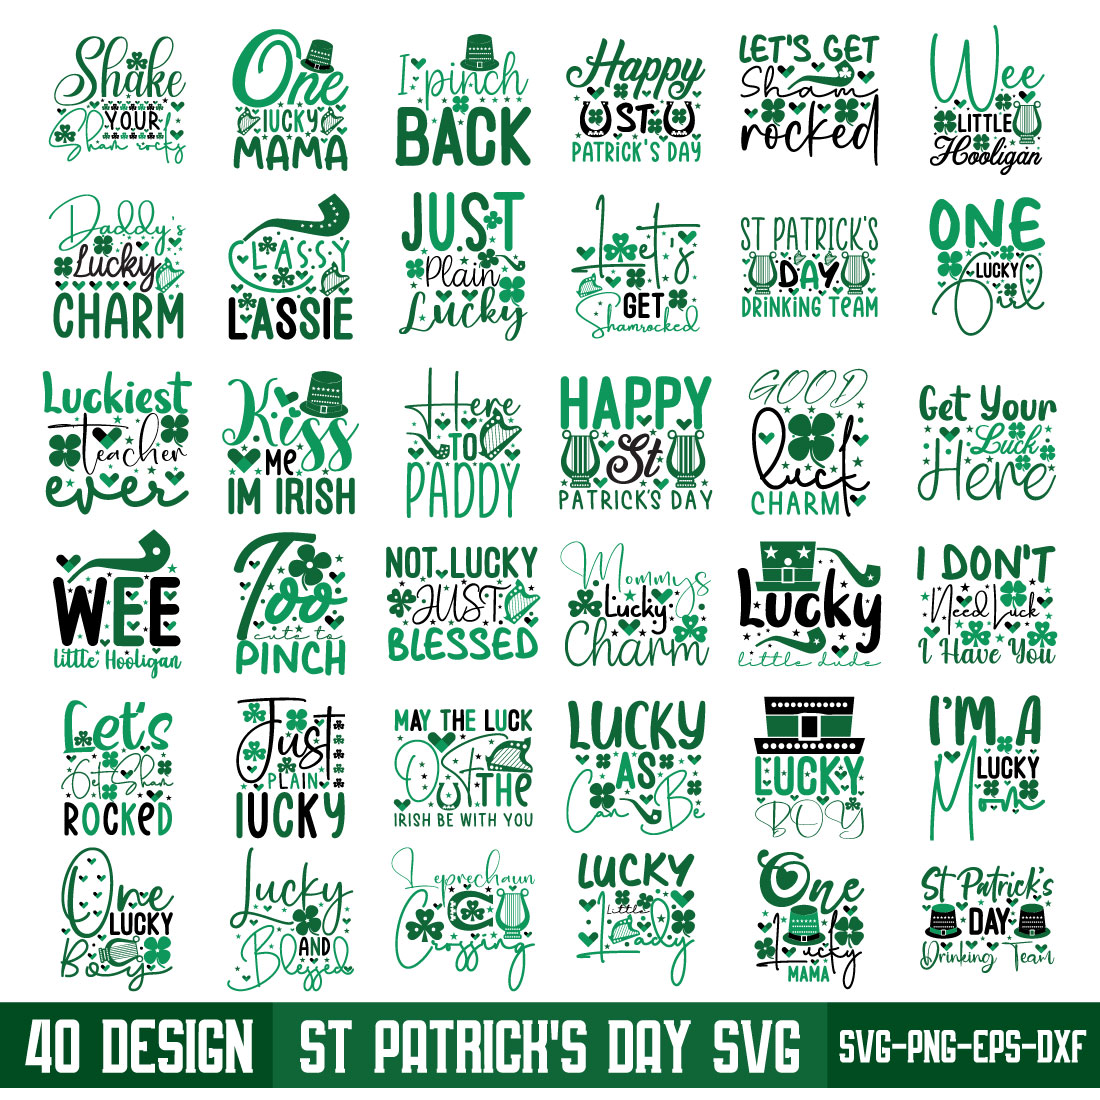 St Patrick's Day SVG Bundle cover image.